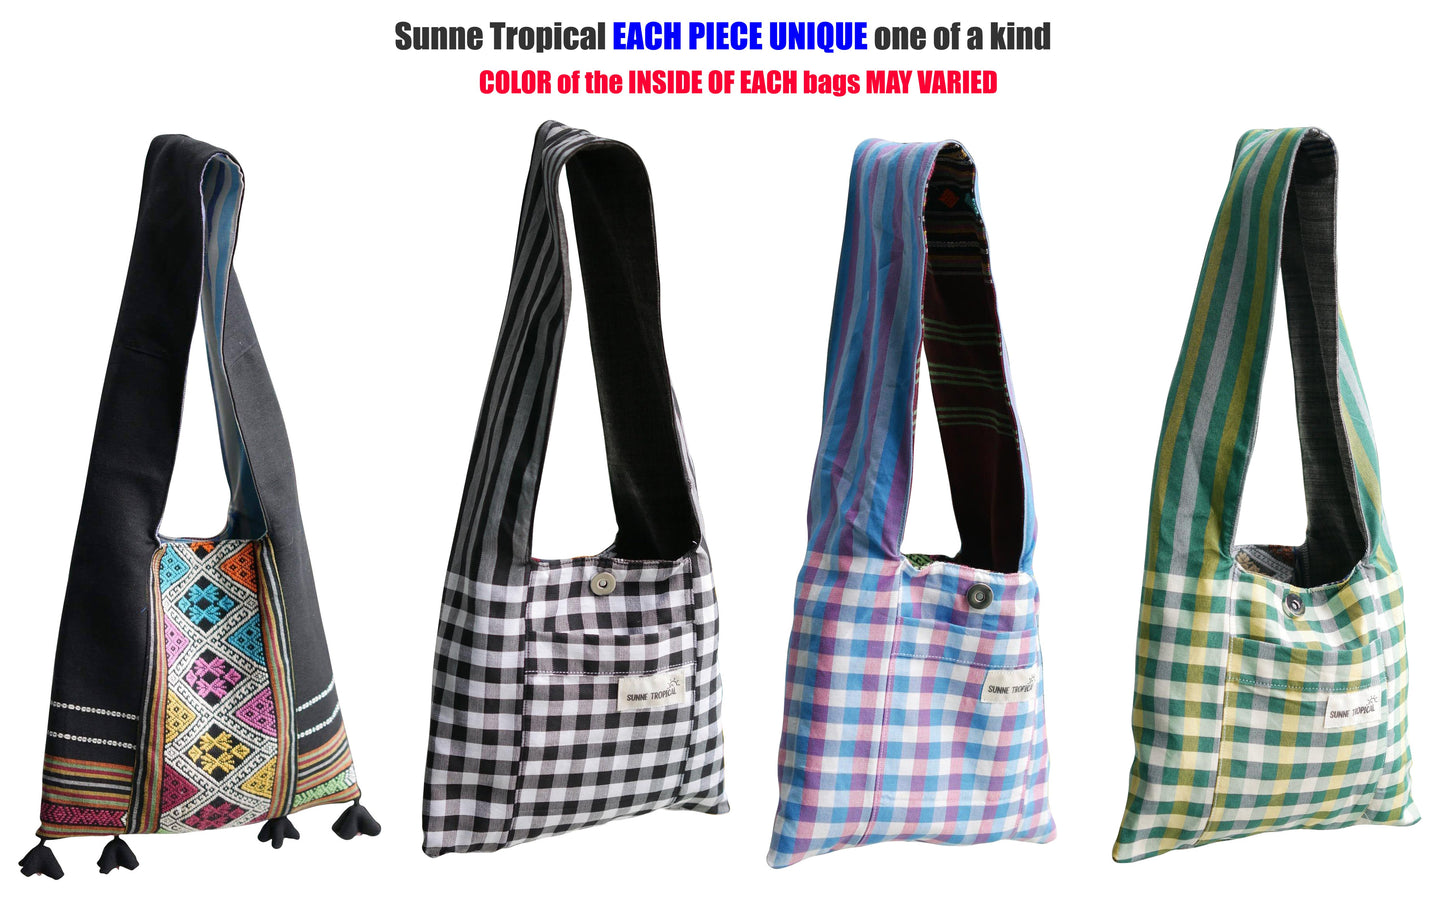 Handwoven Hand-dyed Handmade ETHNICS MINI shoulder bag tote bag Sunne Tropical - BROWN